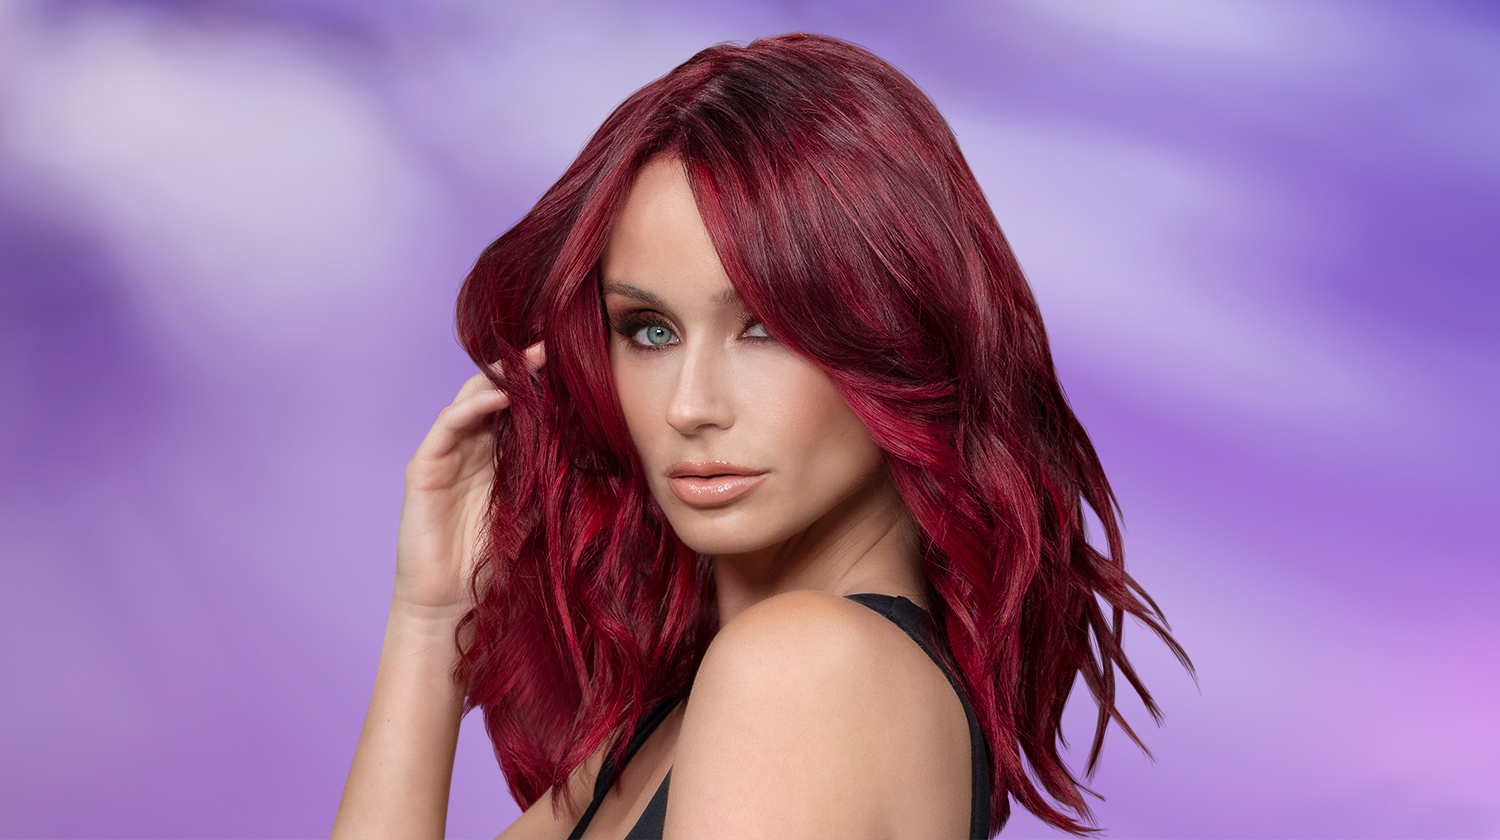 vibrant red hair dye for dark hair